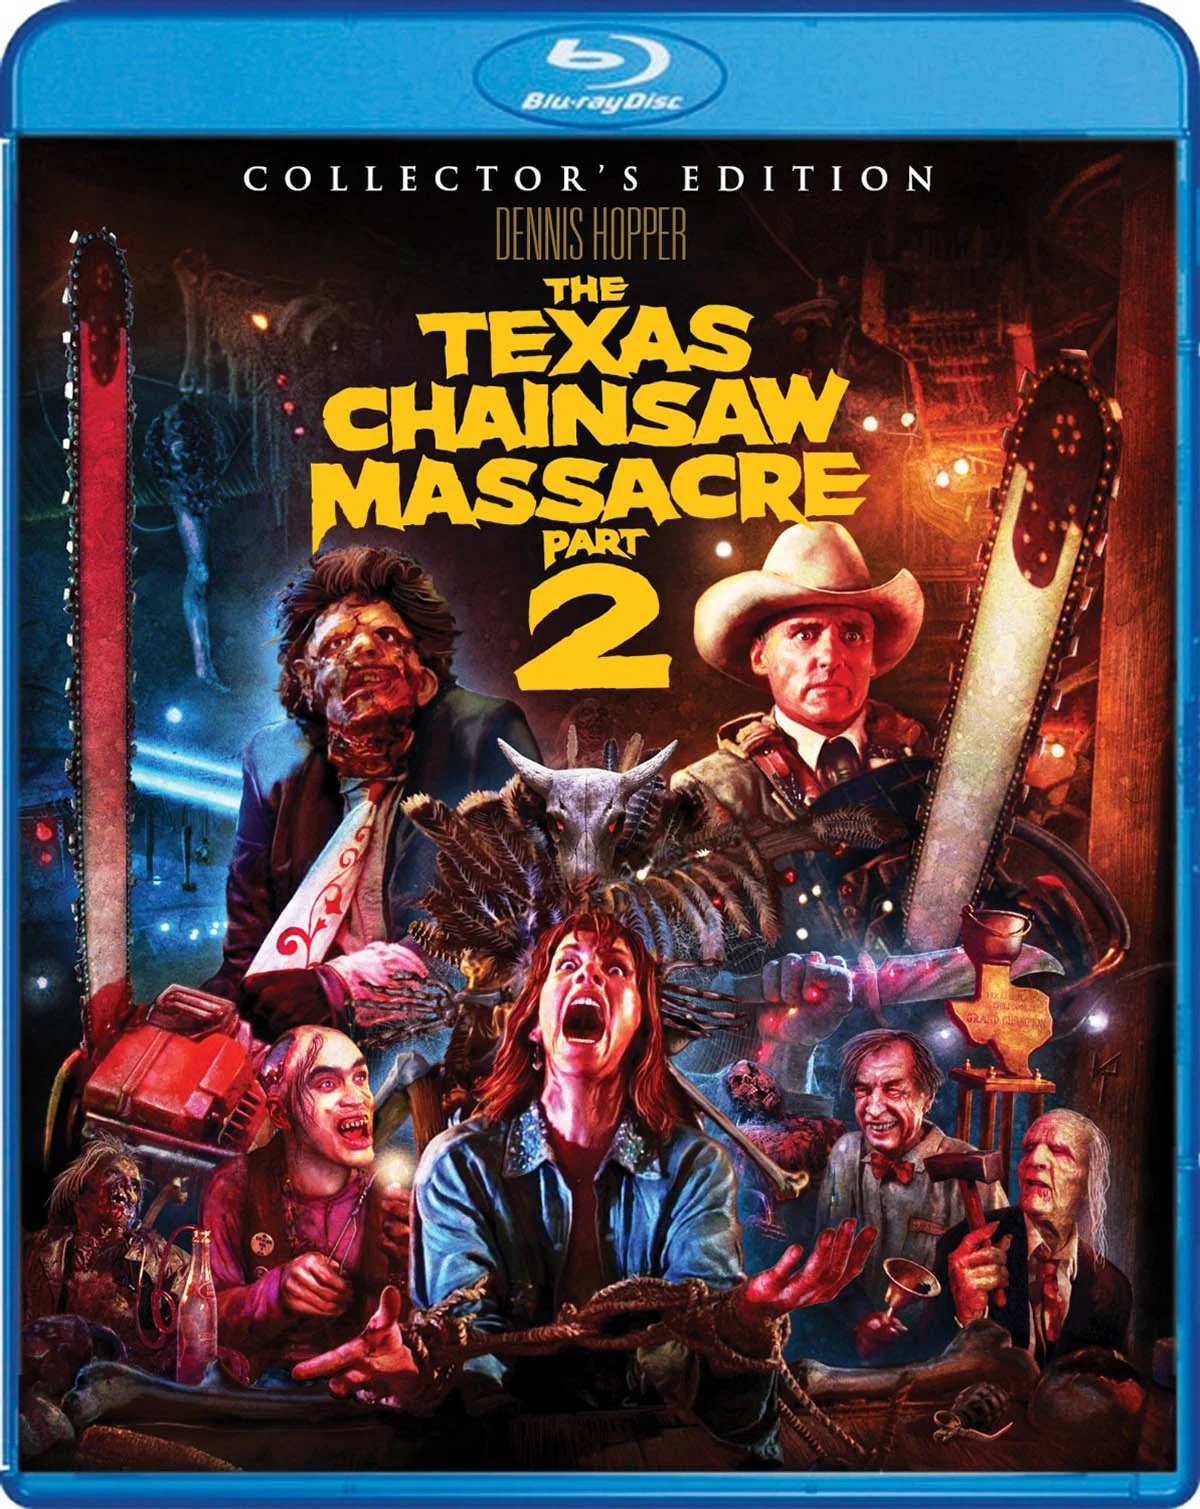 The Texas Chainsaw Massacre 2 movie on blu ray